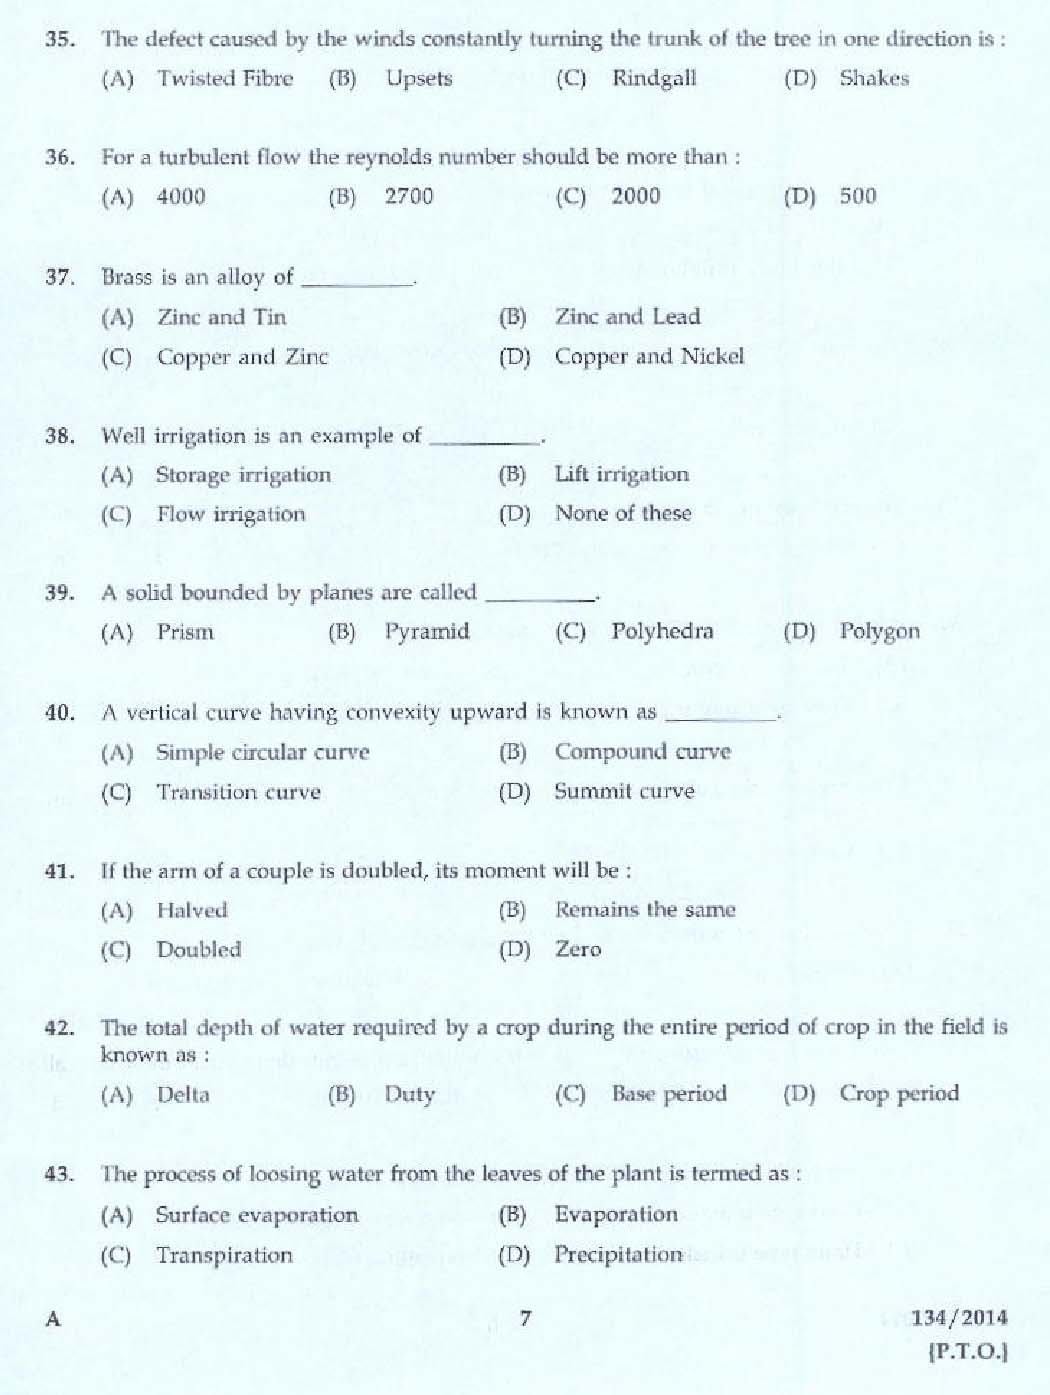 Kerala PSC Work Superintendent Exam Code 1342014 5